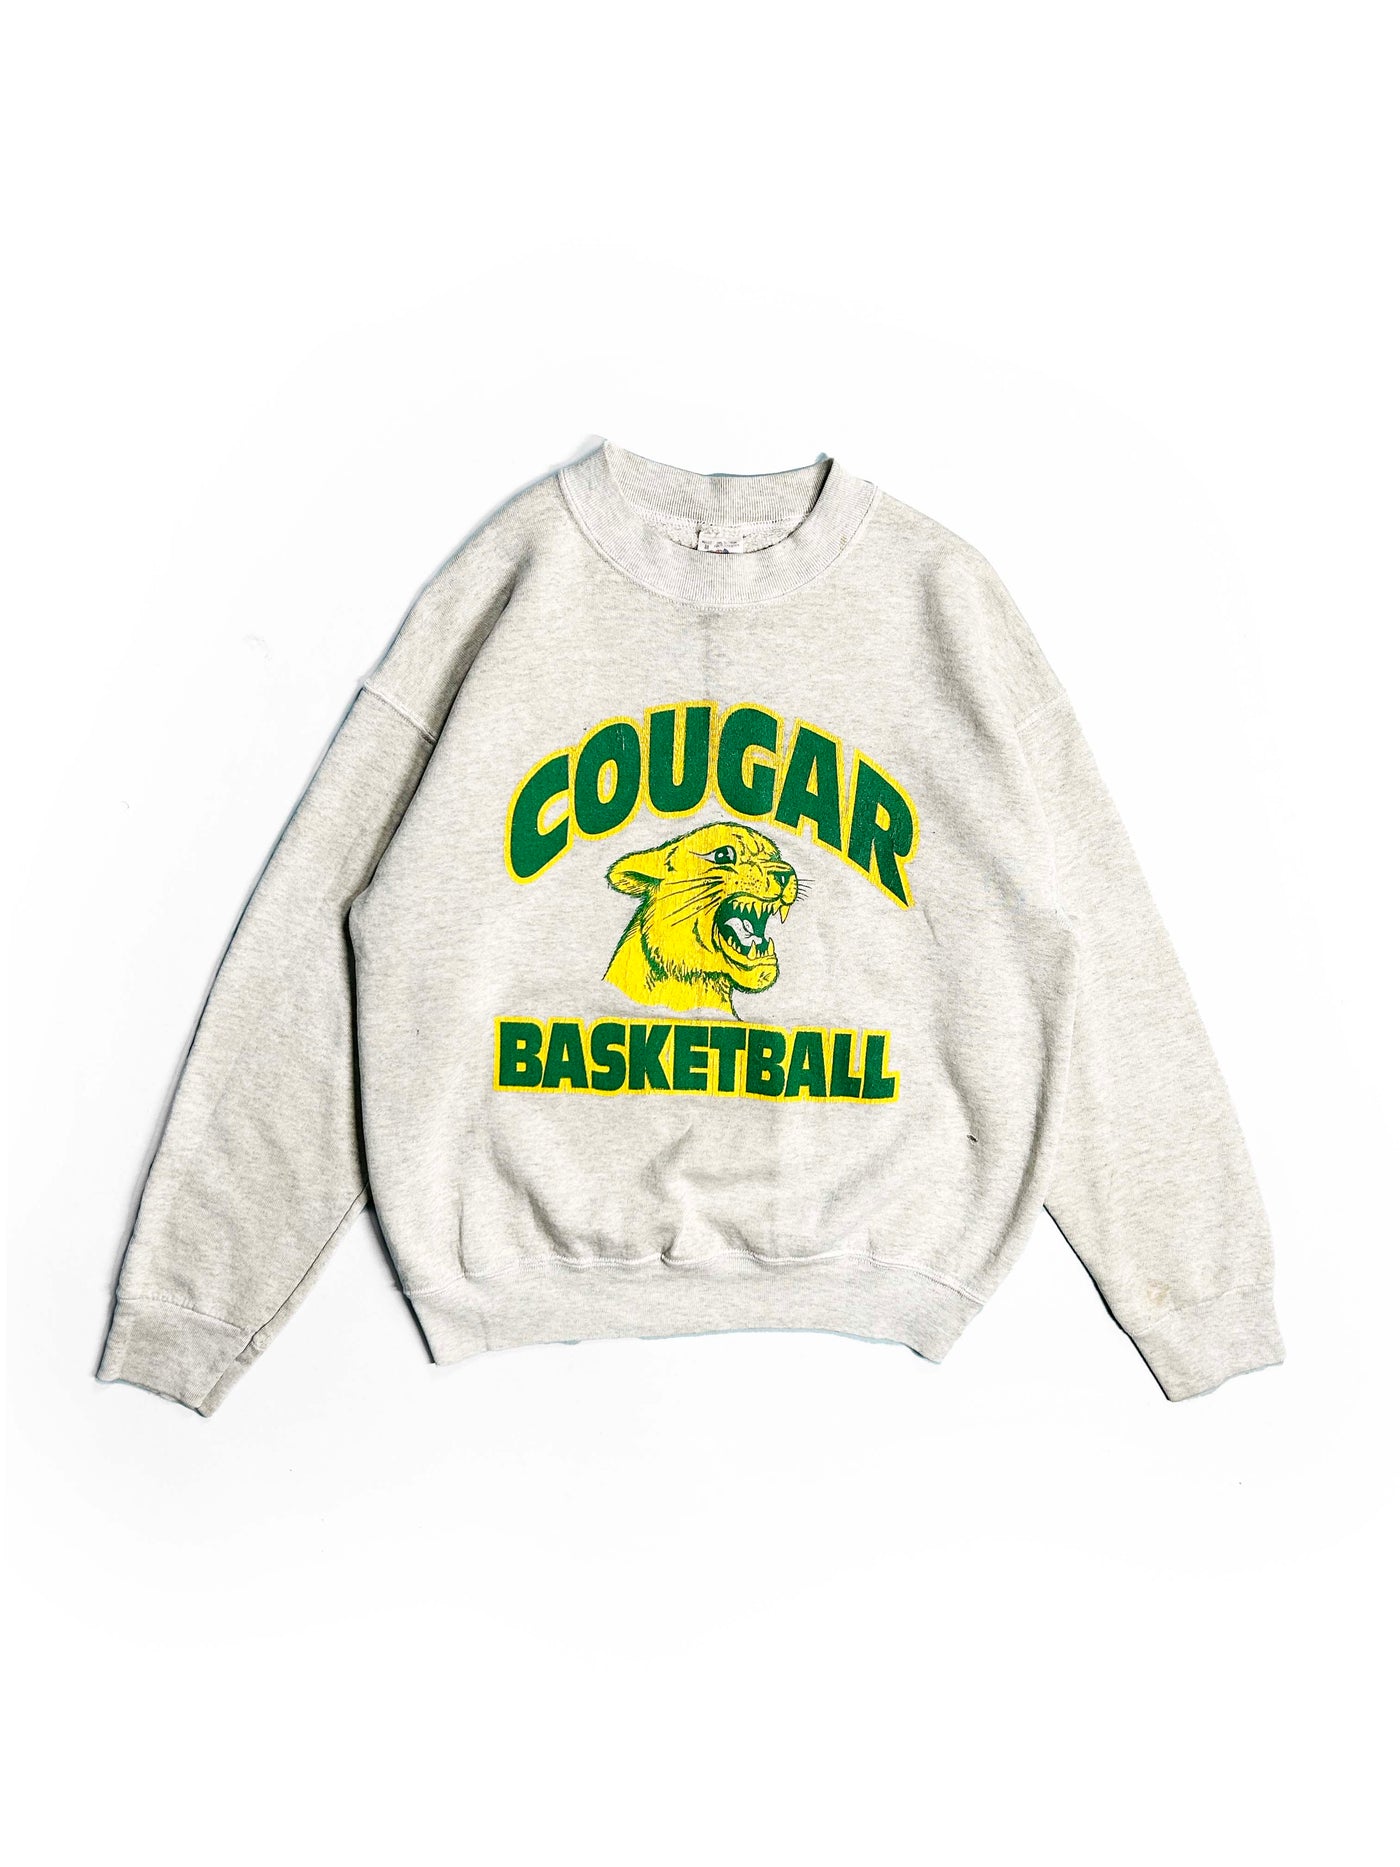 Vintage 90s Cougar Basketball Crewneck